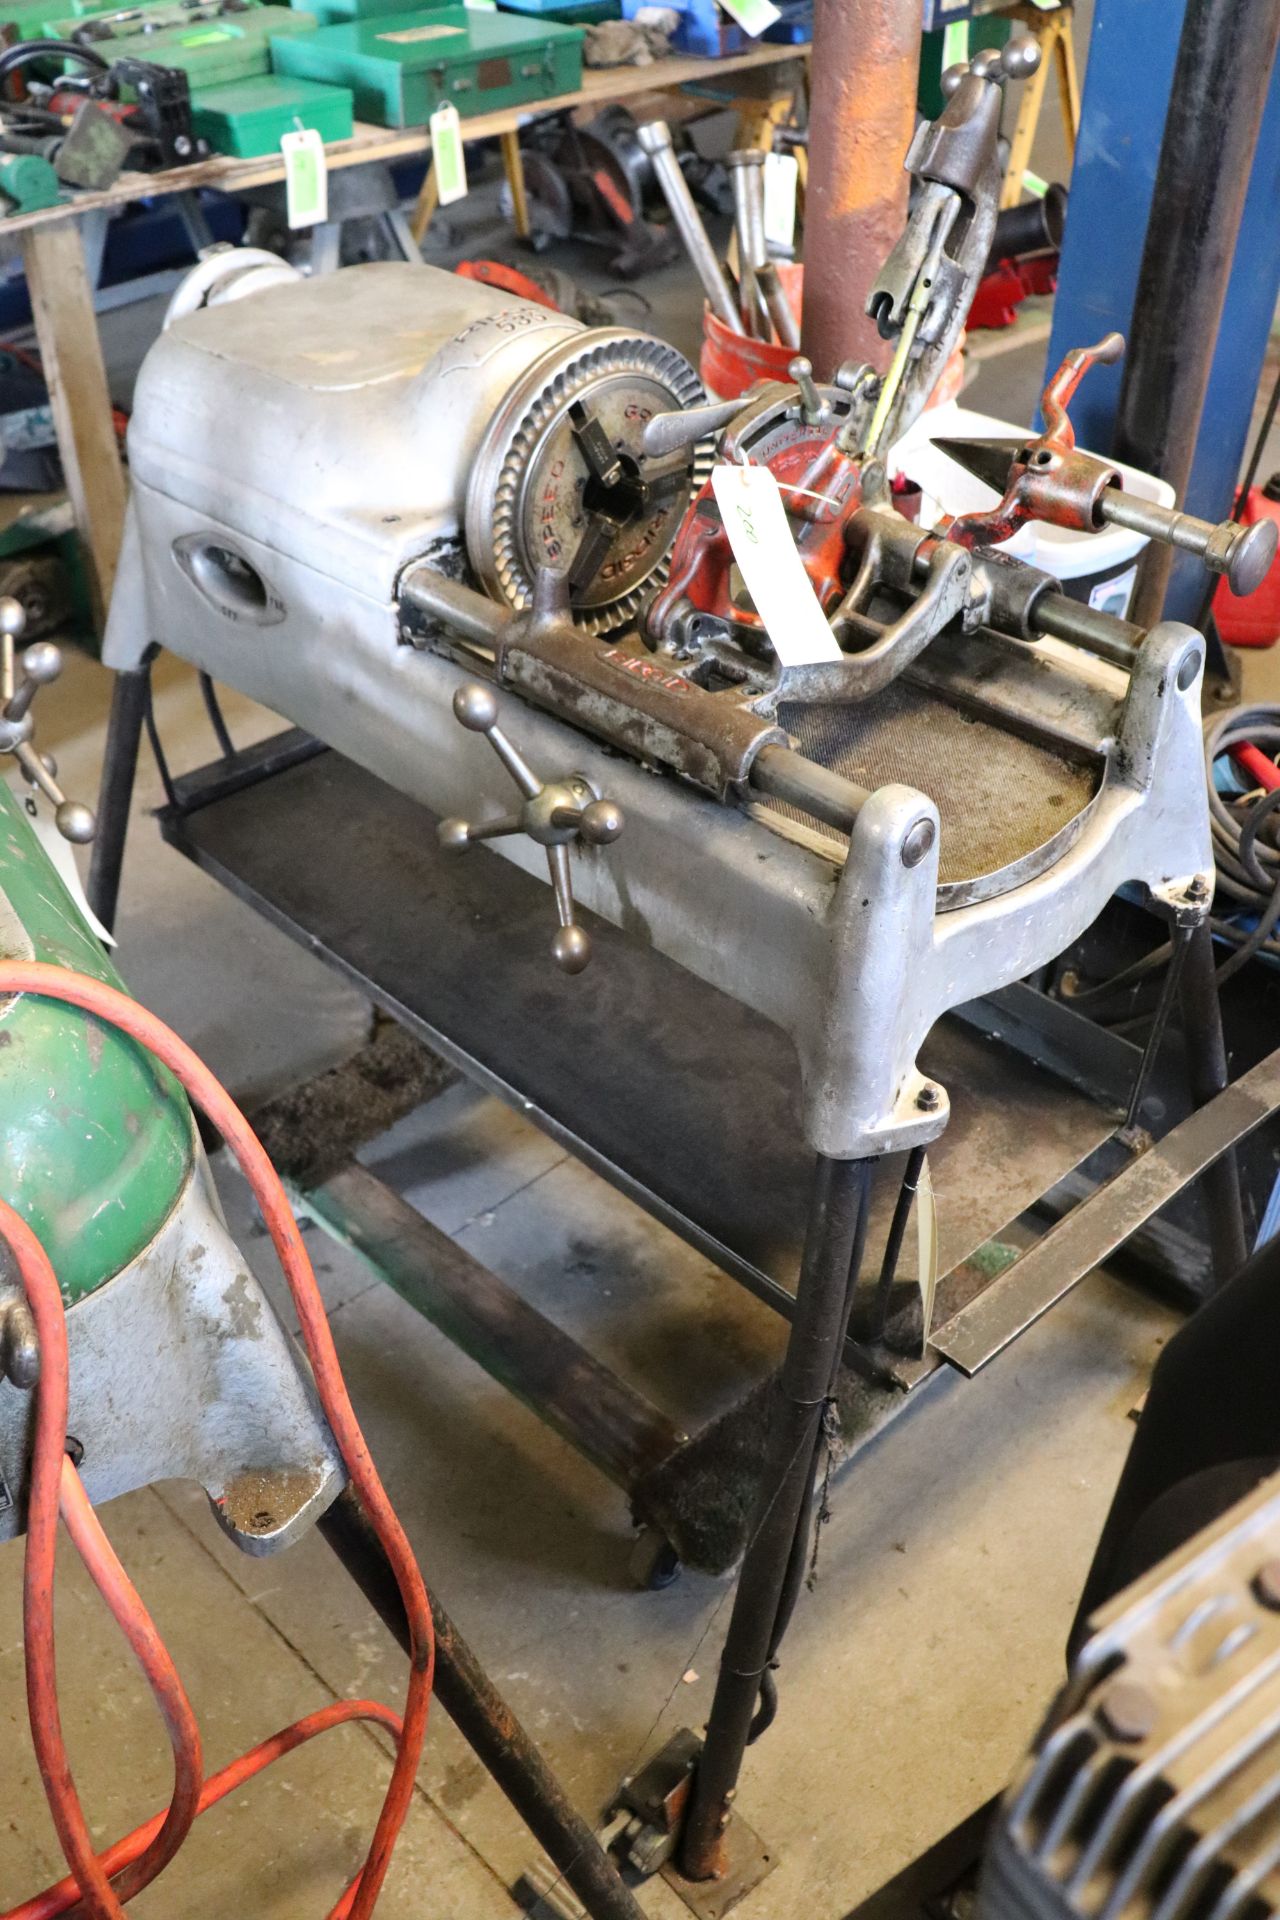 Ridgid model 535 pipe threading machine, serial 337996